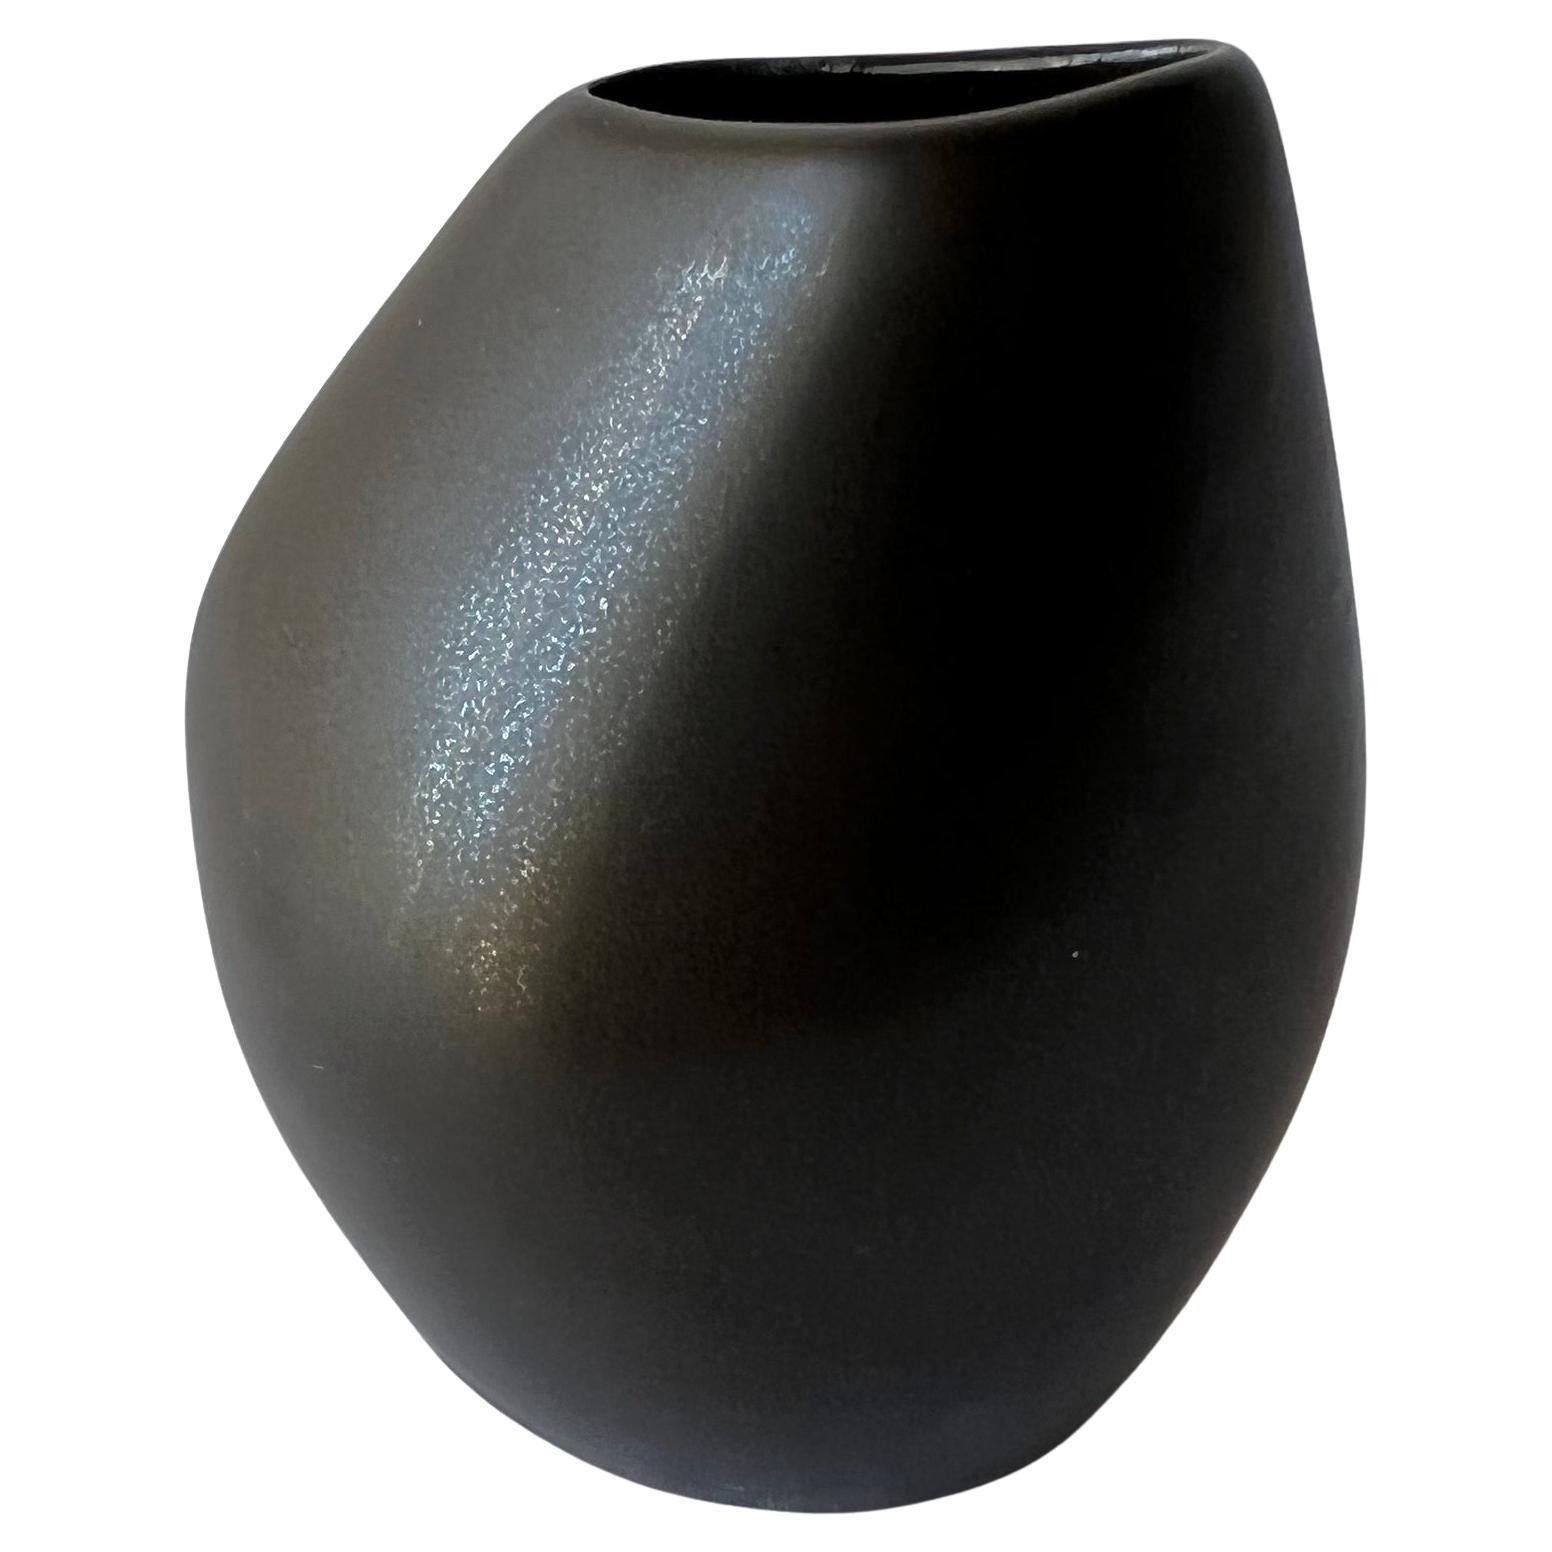 Lillemor Mannerheim Upsala Ekeby Swedish Modernist Mangania Stoneware Vase